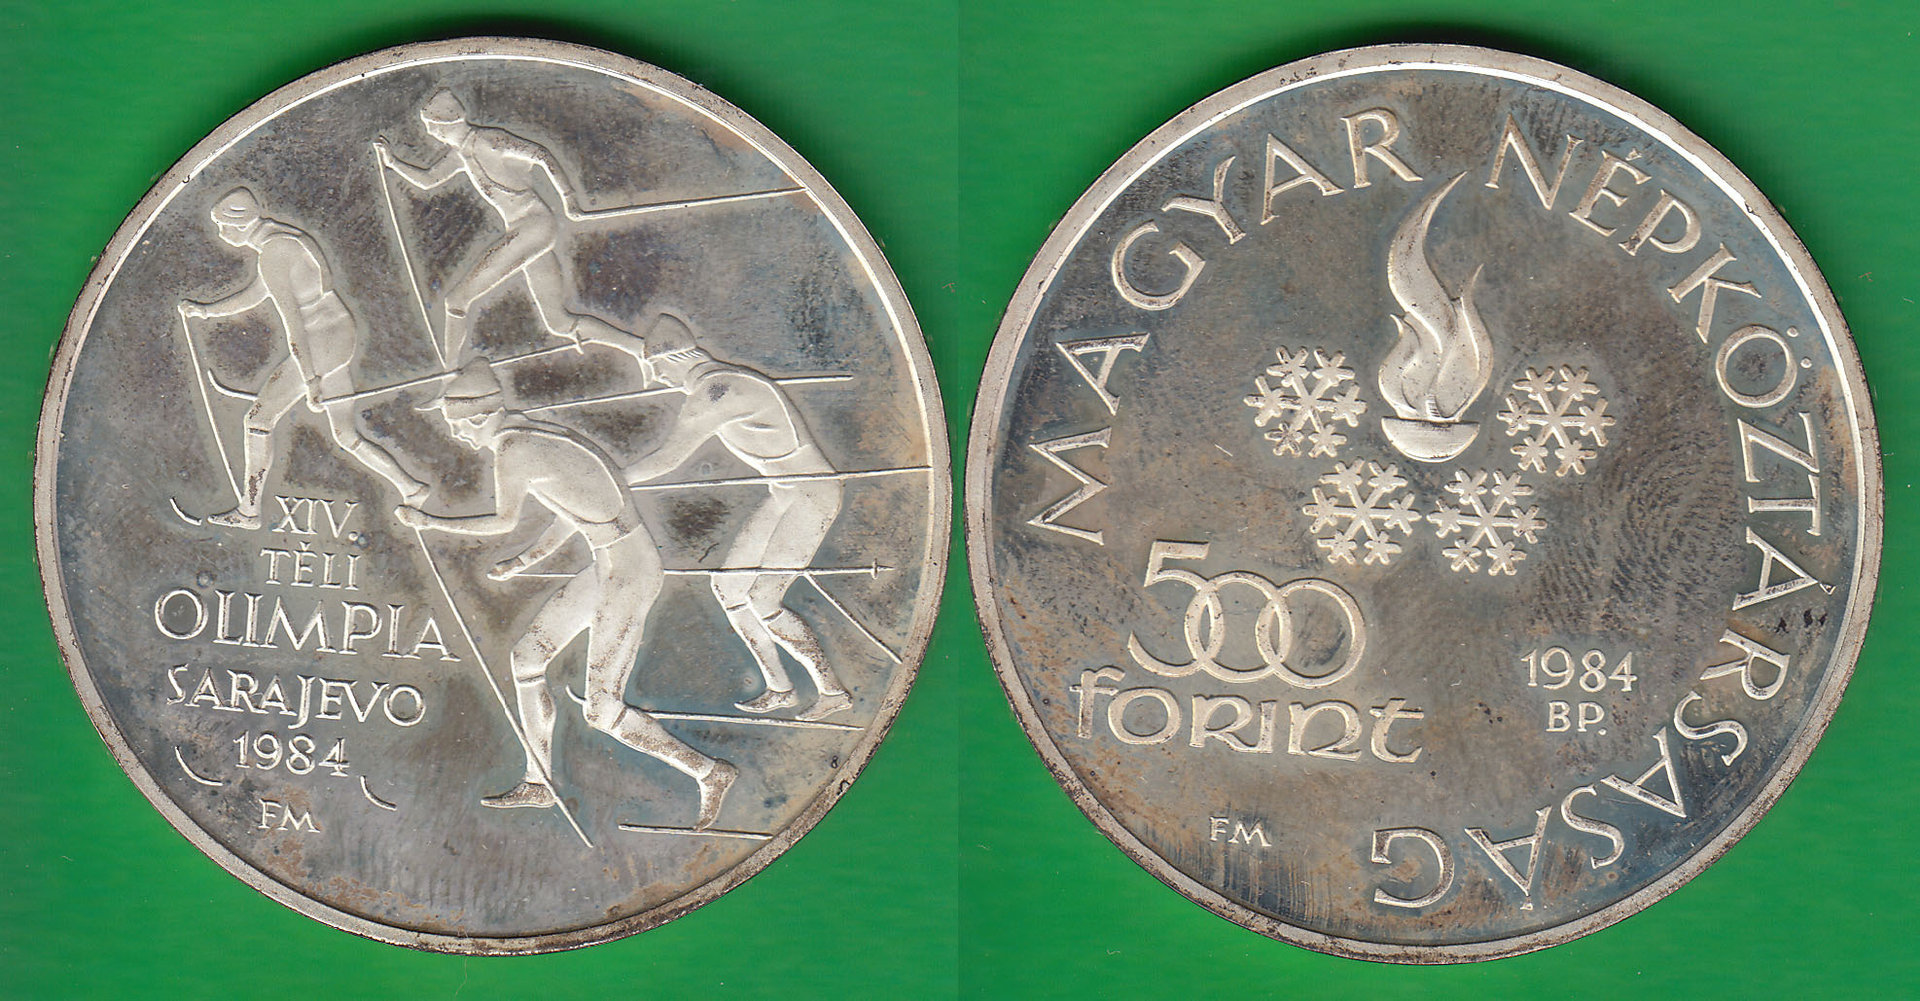 HUNGRIA - HUNGARY. 500 FORINT DE 1984 BP. PLATA 0.640. (2)